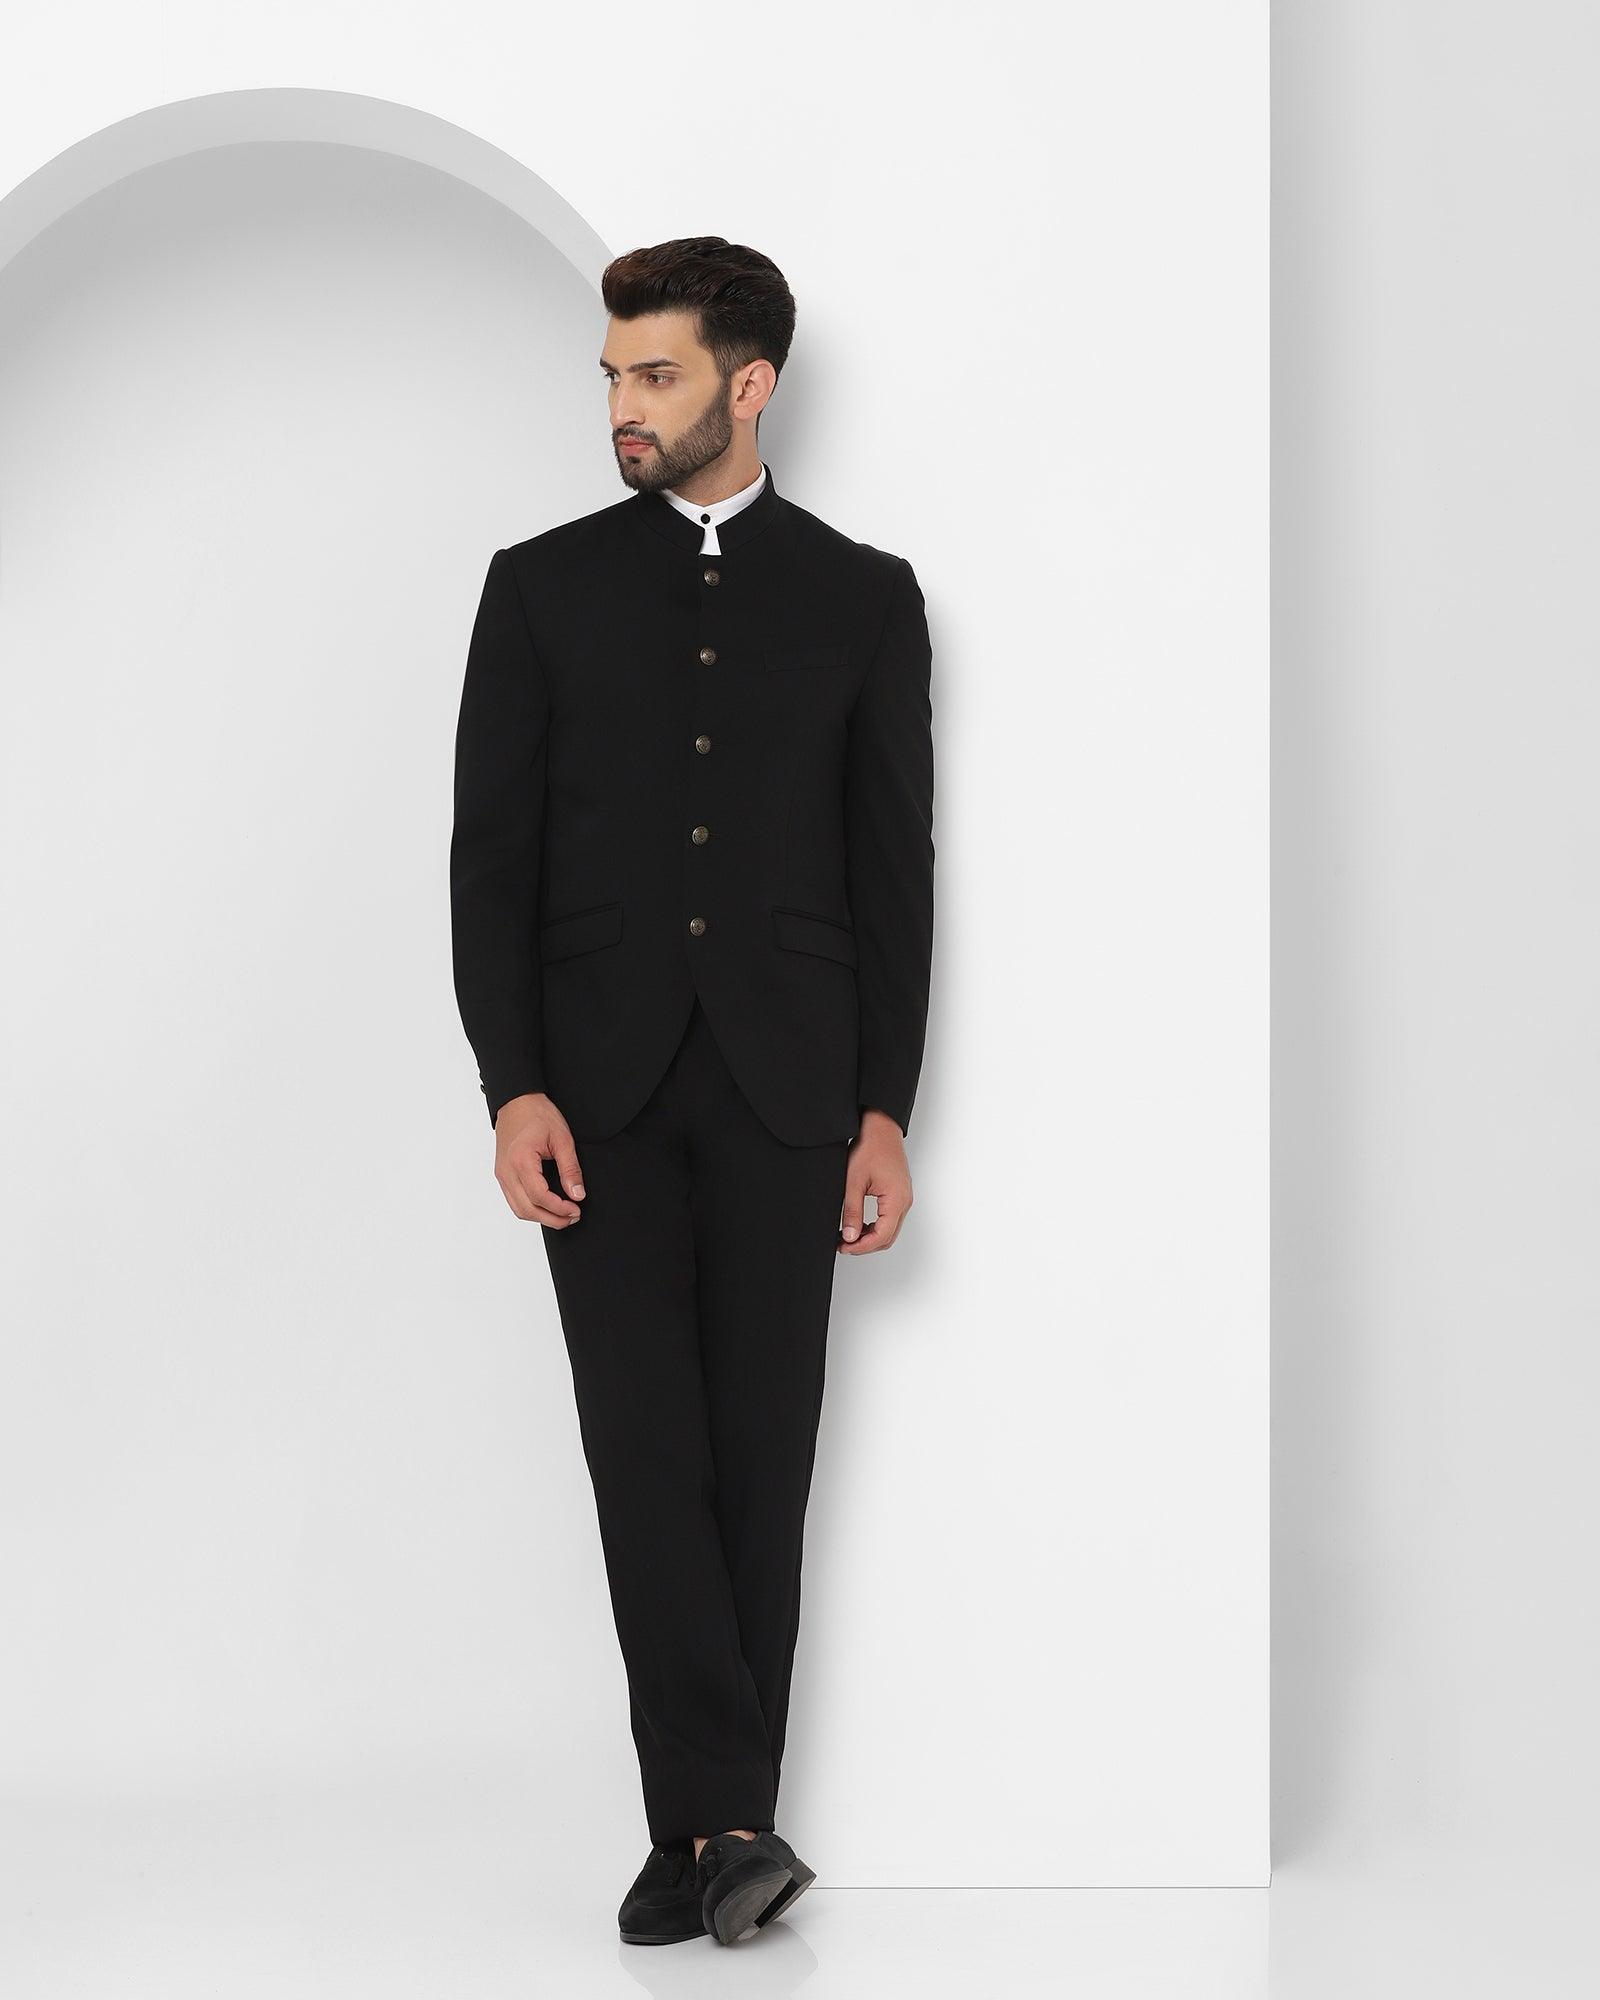 Black Men Suits Double Breasted Slim Fit Tuxedo 2 Piece Wedding Groom Peak  Lapel | eBay